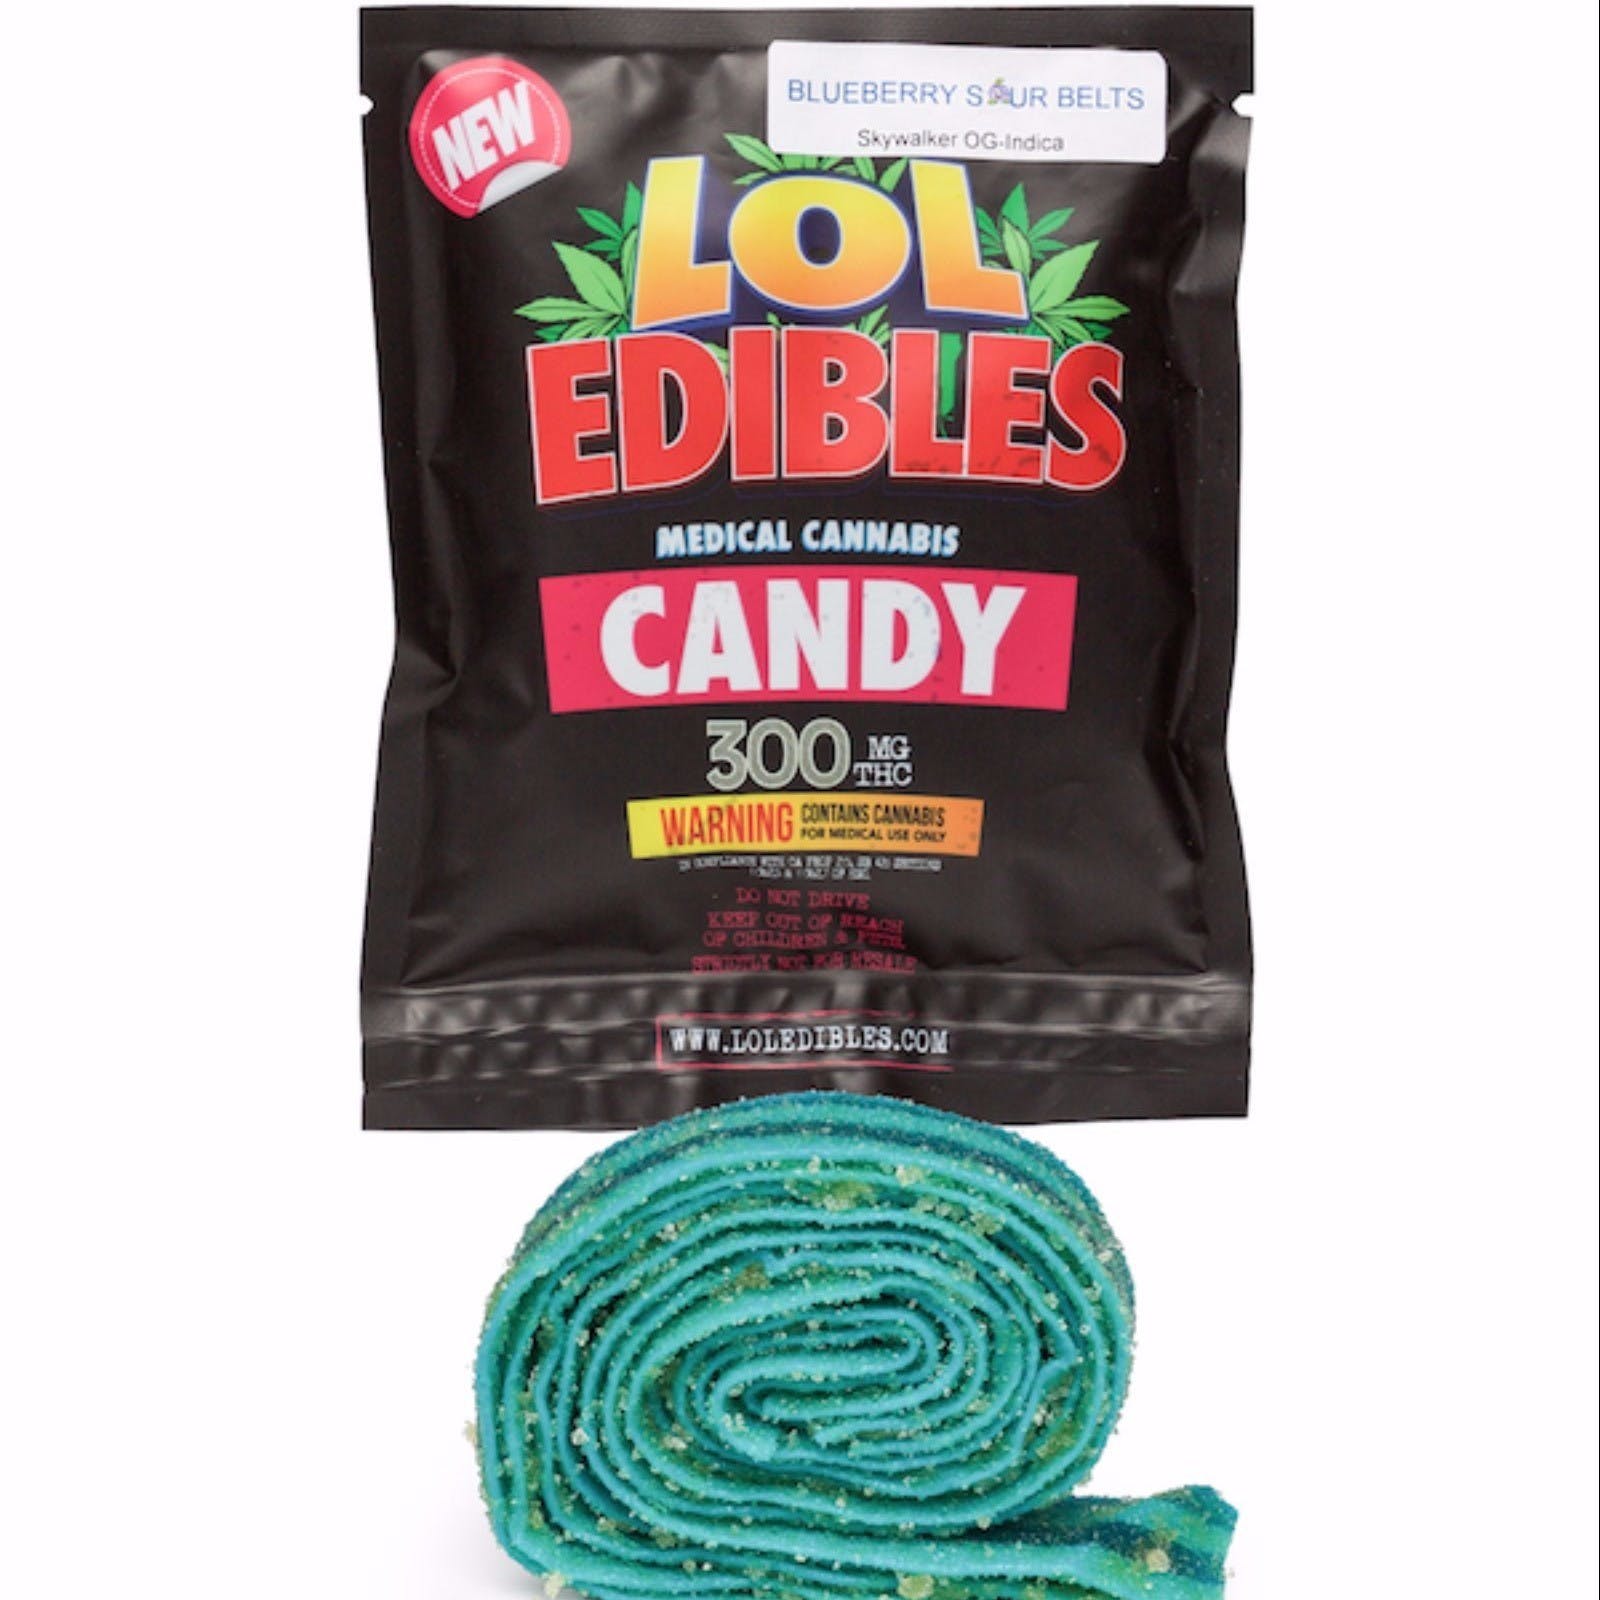 edible-lol-edibles-300-mg